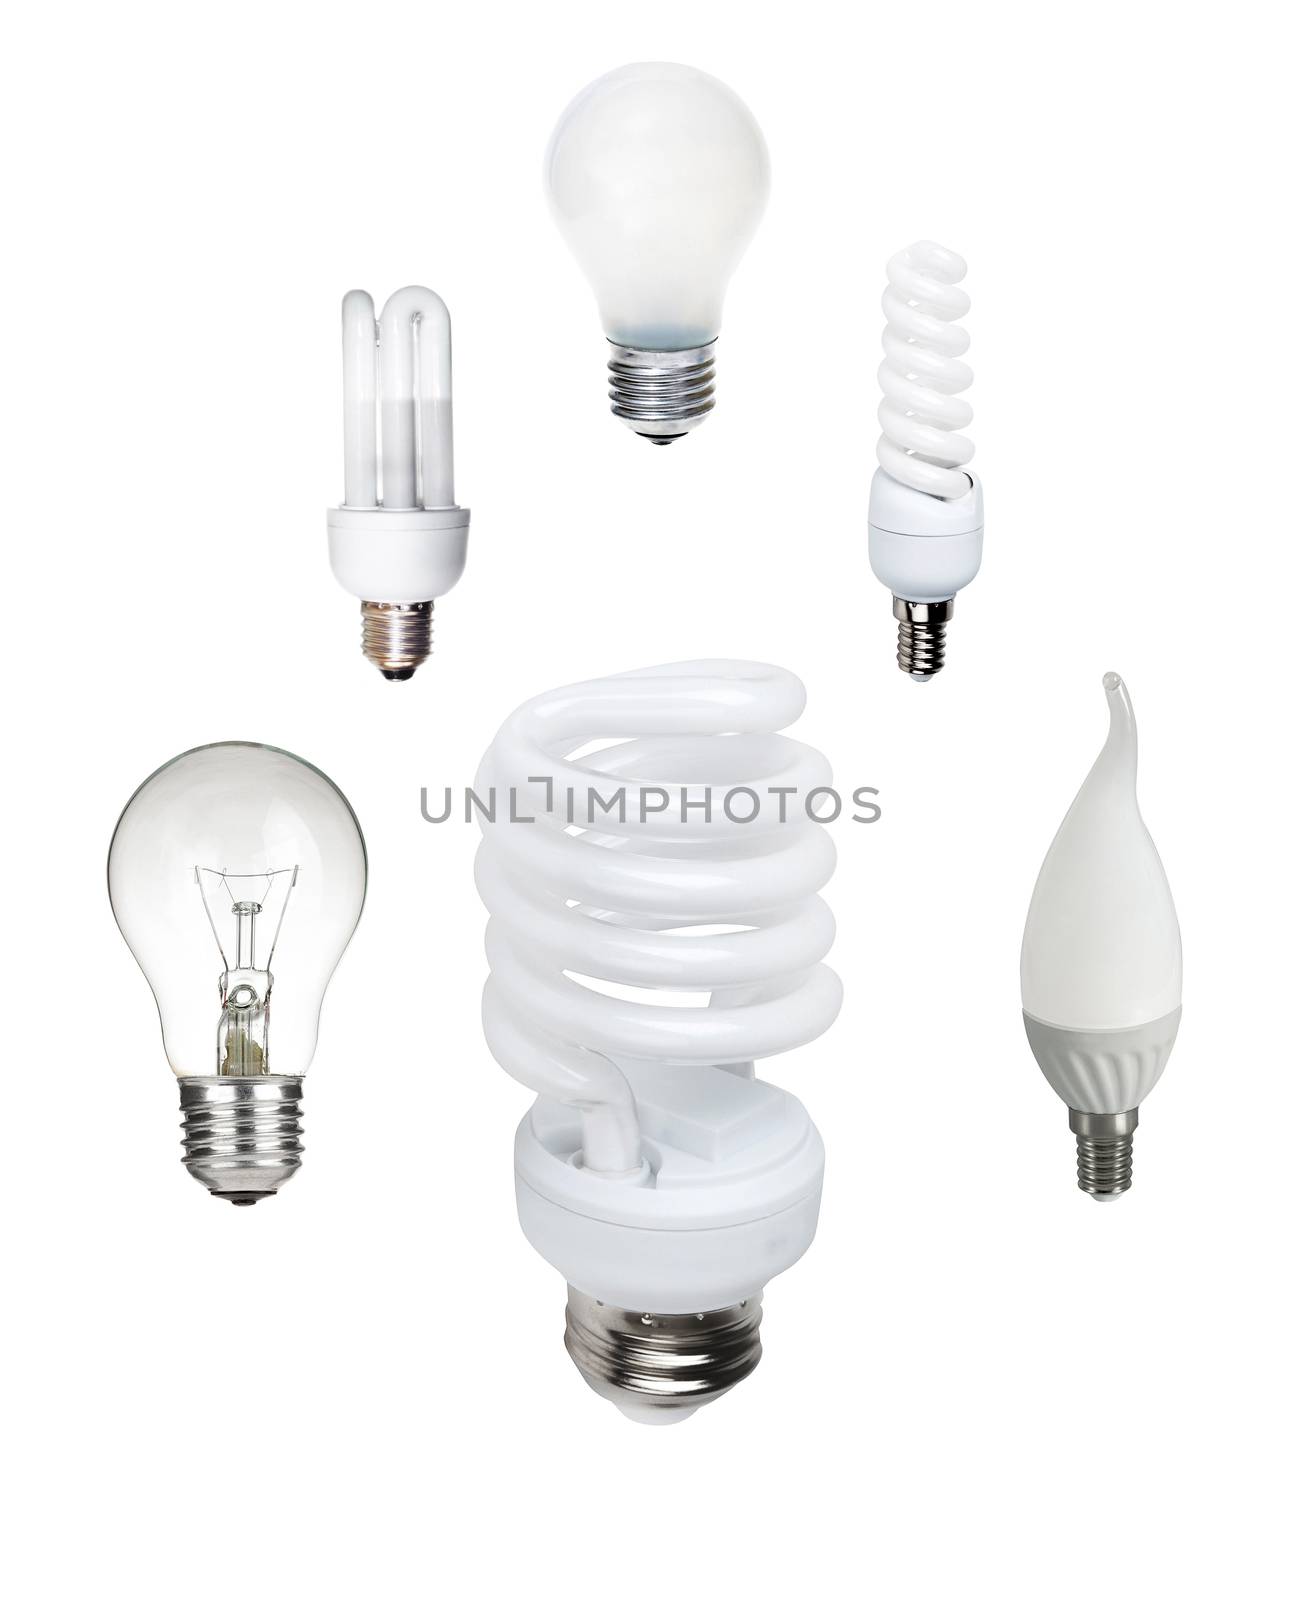 Classic and saving light bulb